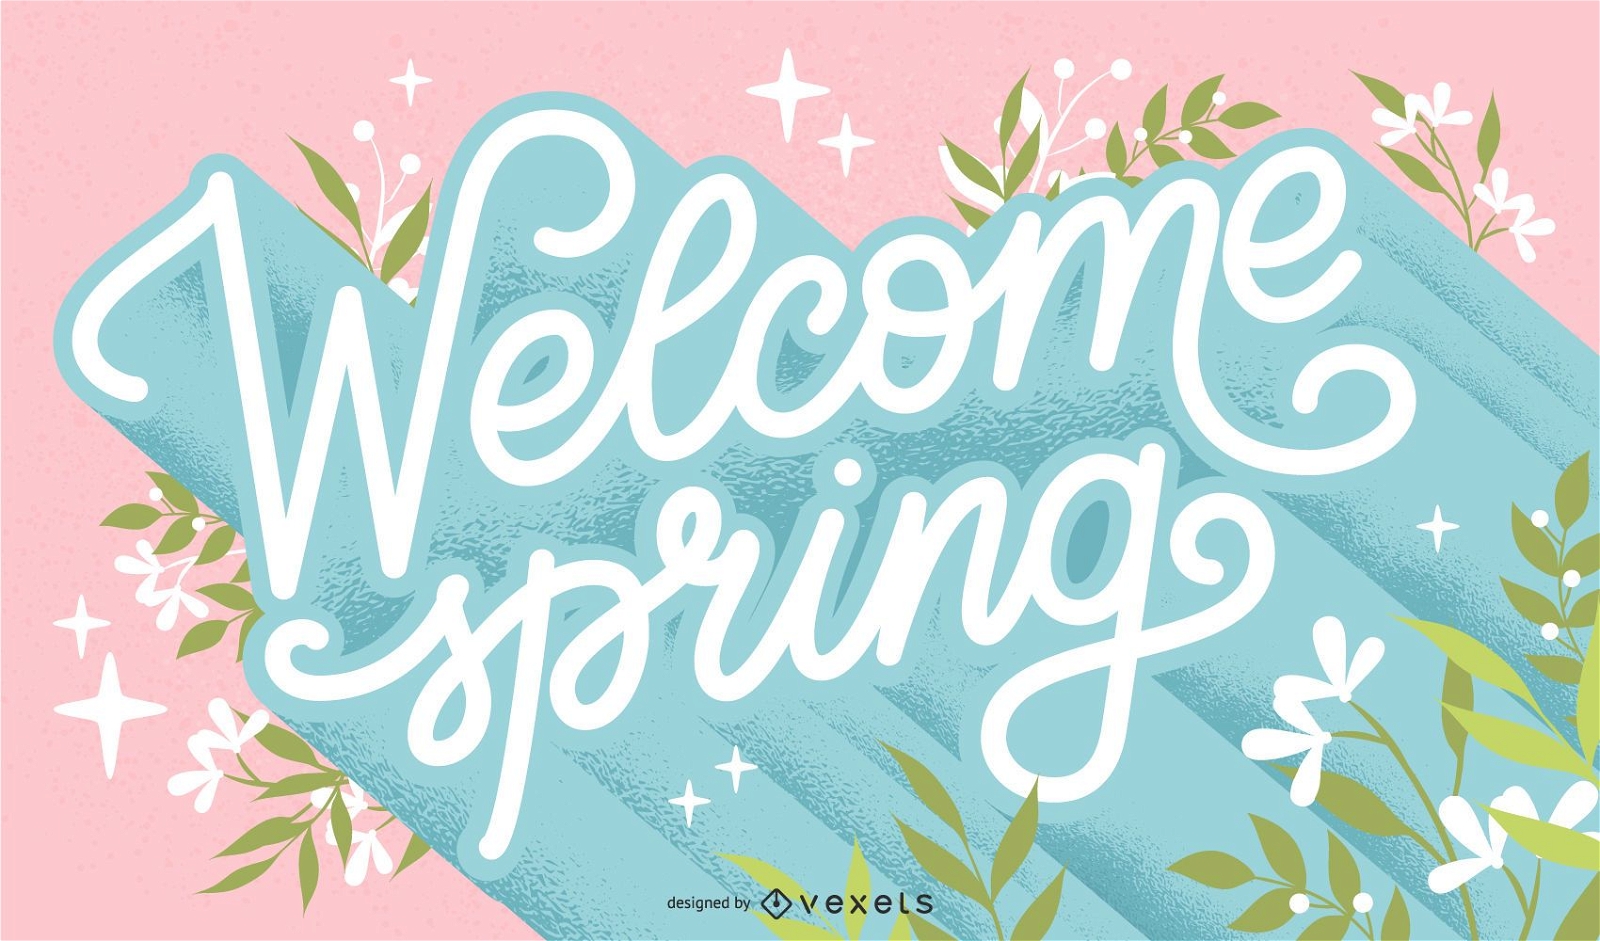 Welcome spring lettering design